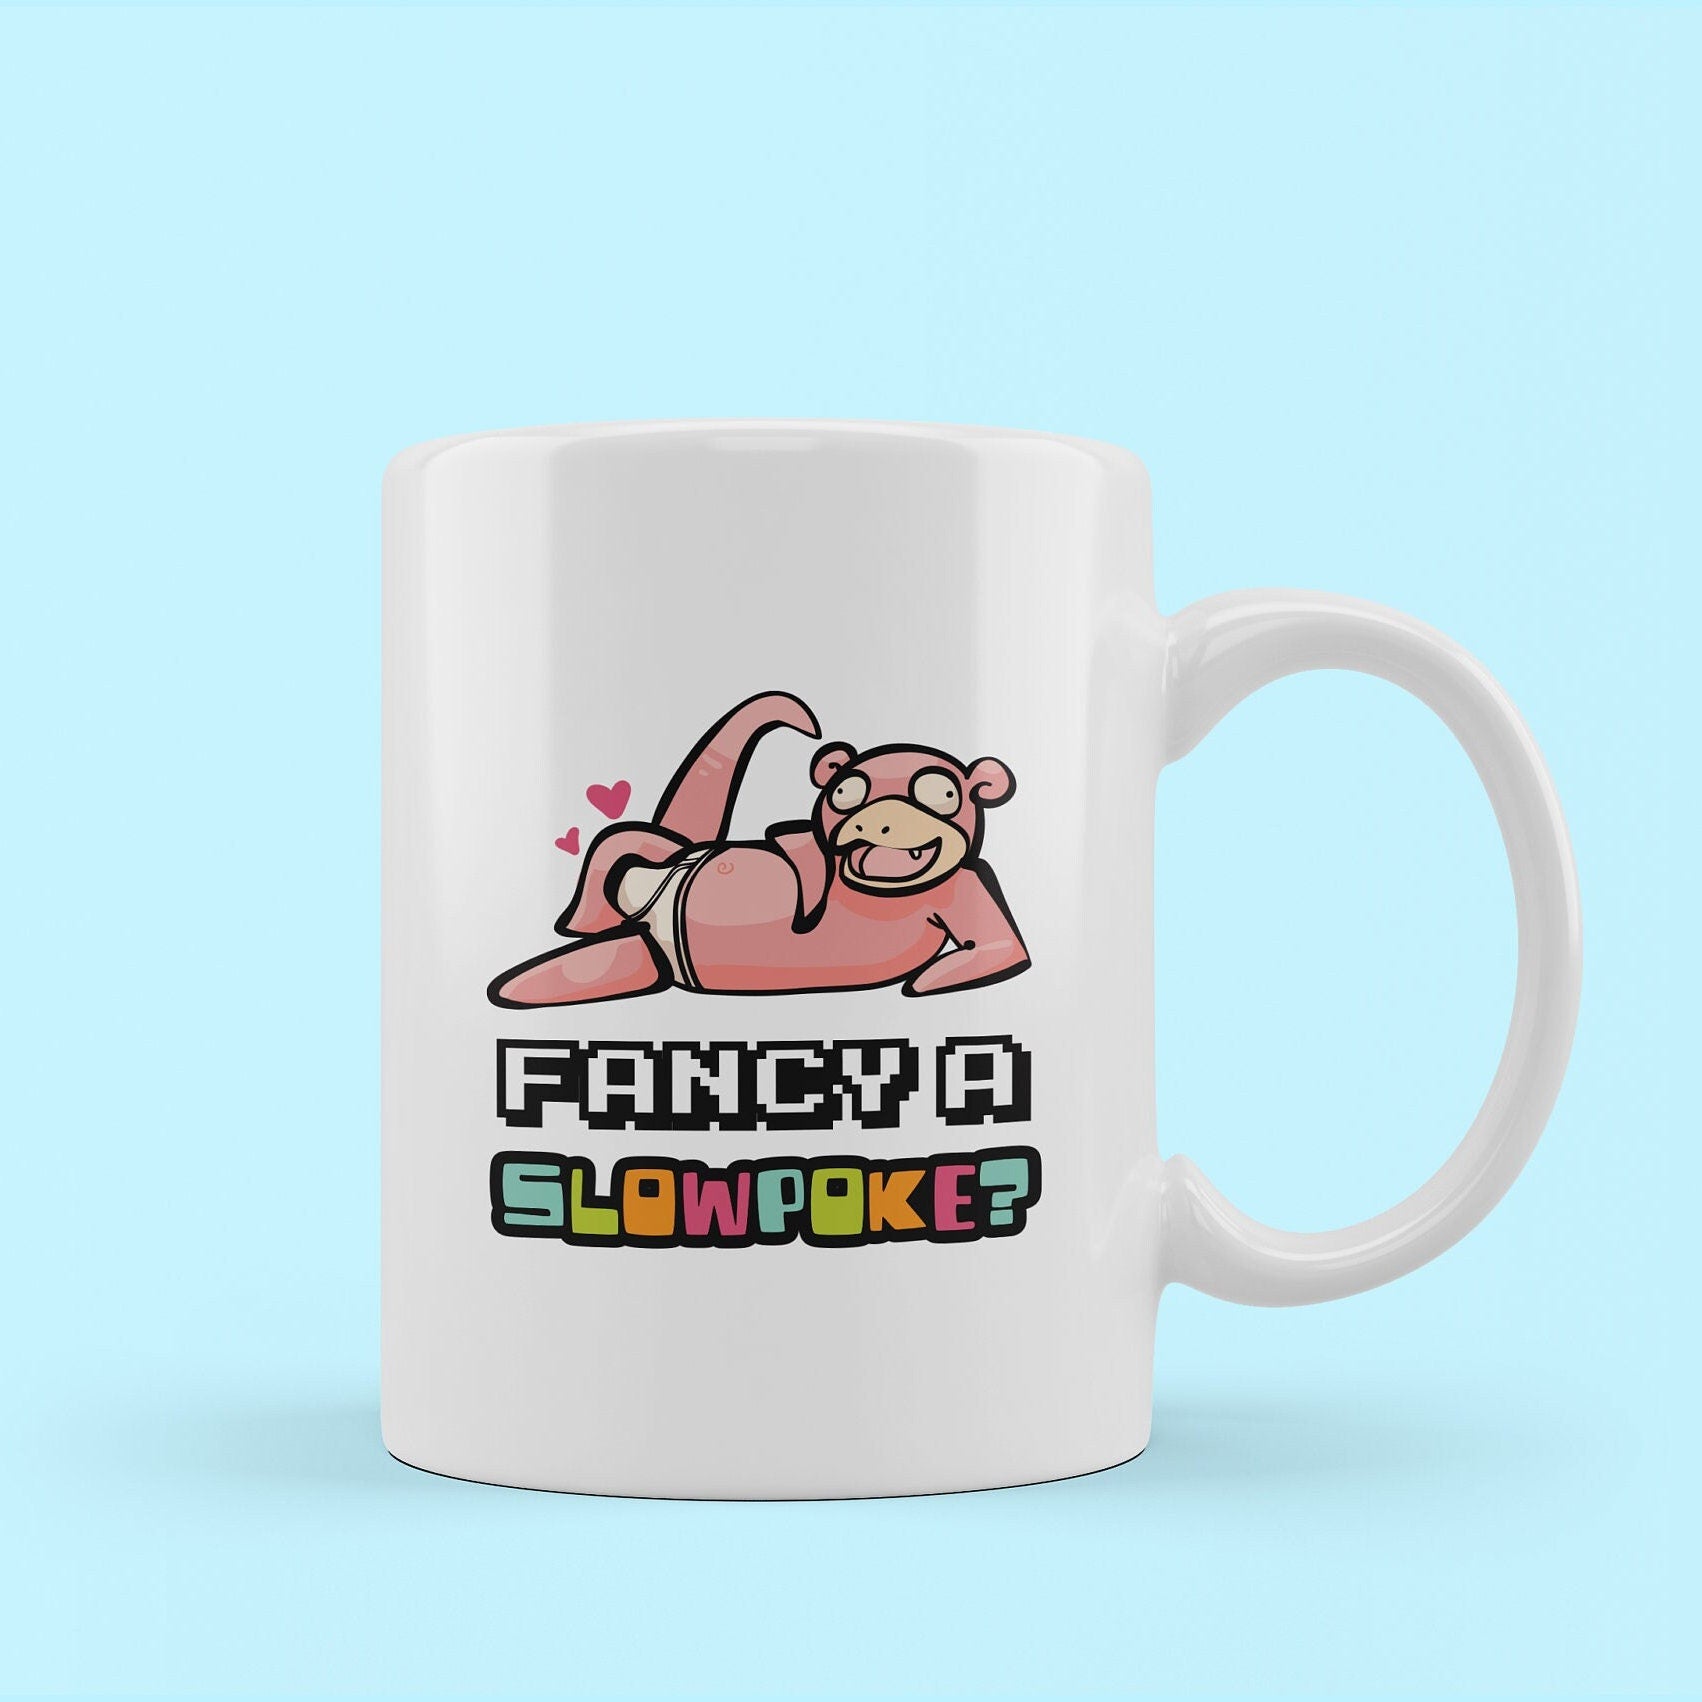 sexy pokemon mug. fancy a slowpoke? naked pokemon on the mug